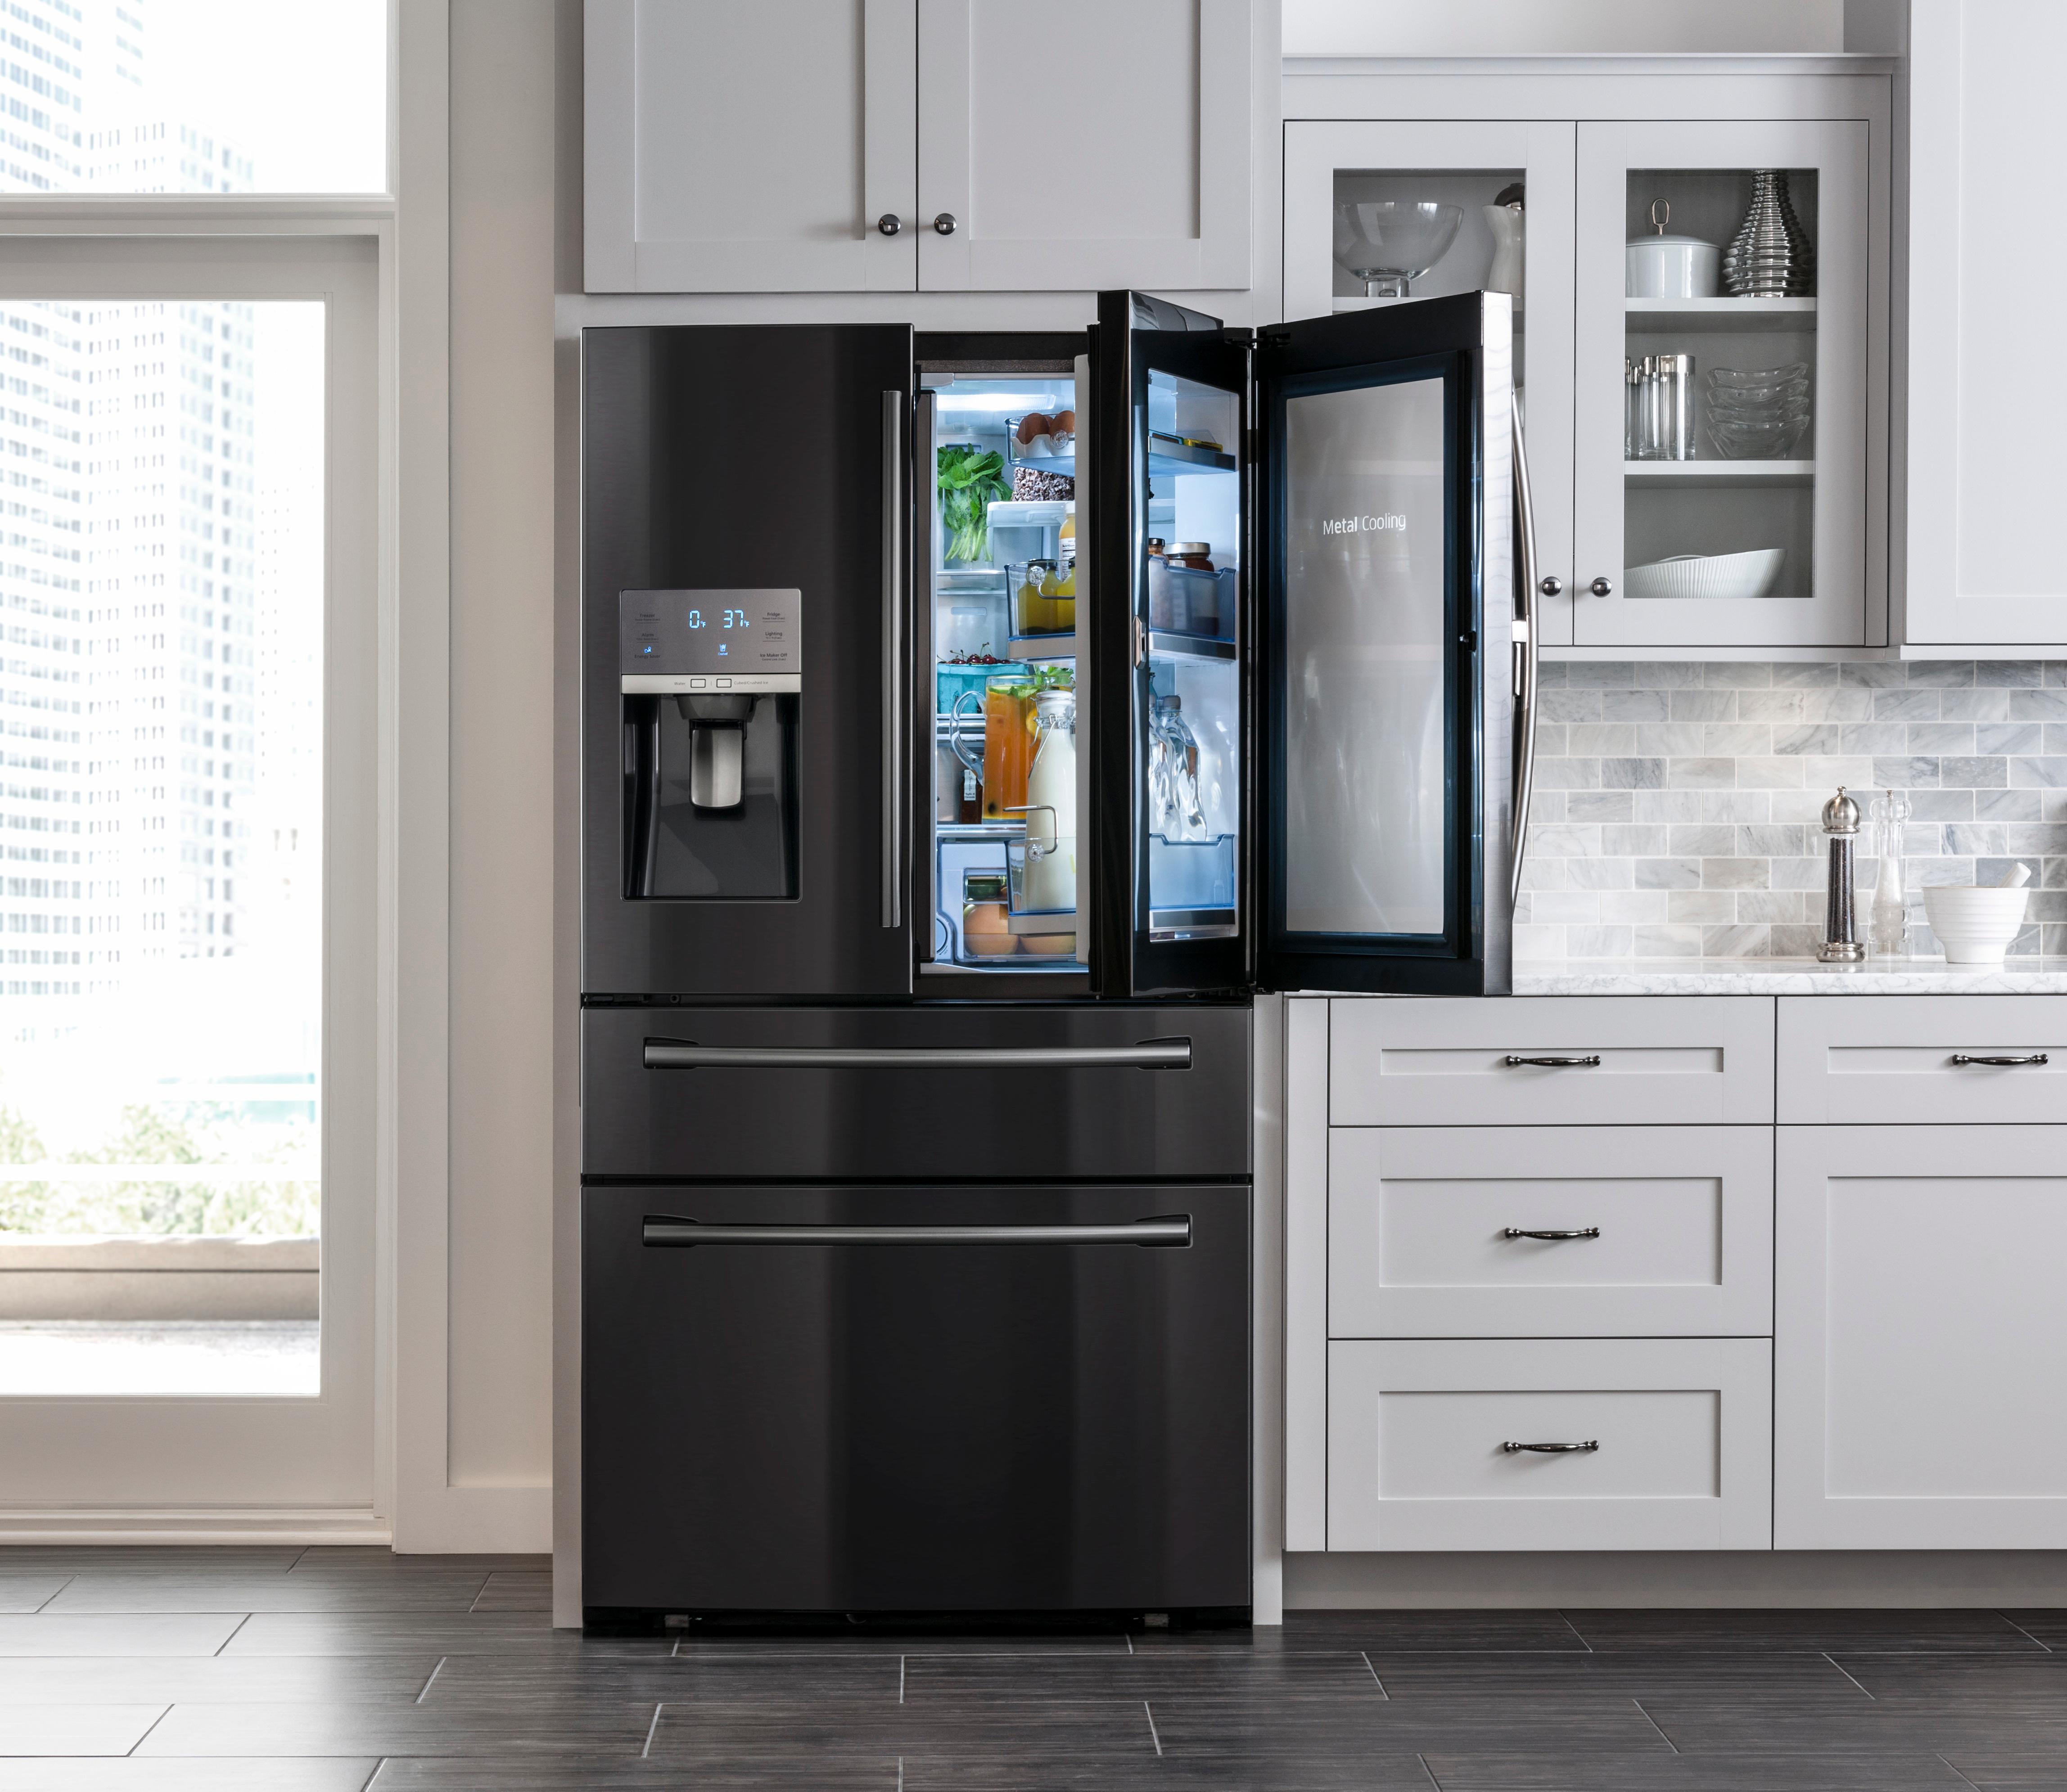 Samsung French Door Refrigerator - Black Stainless Steel